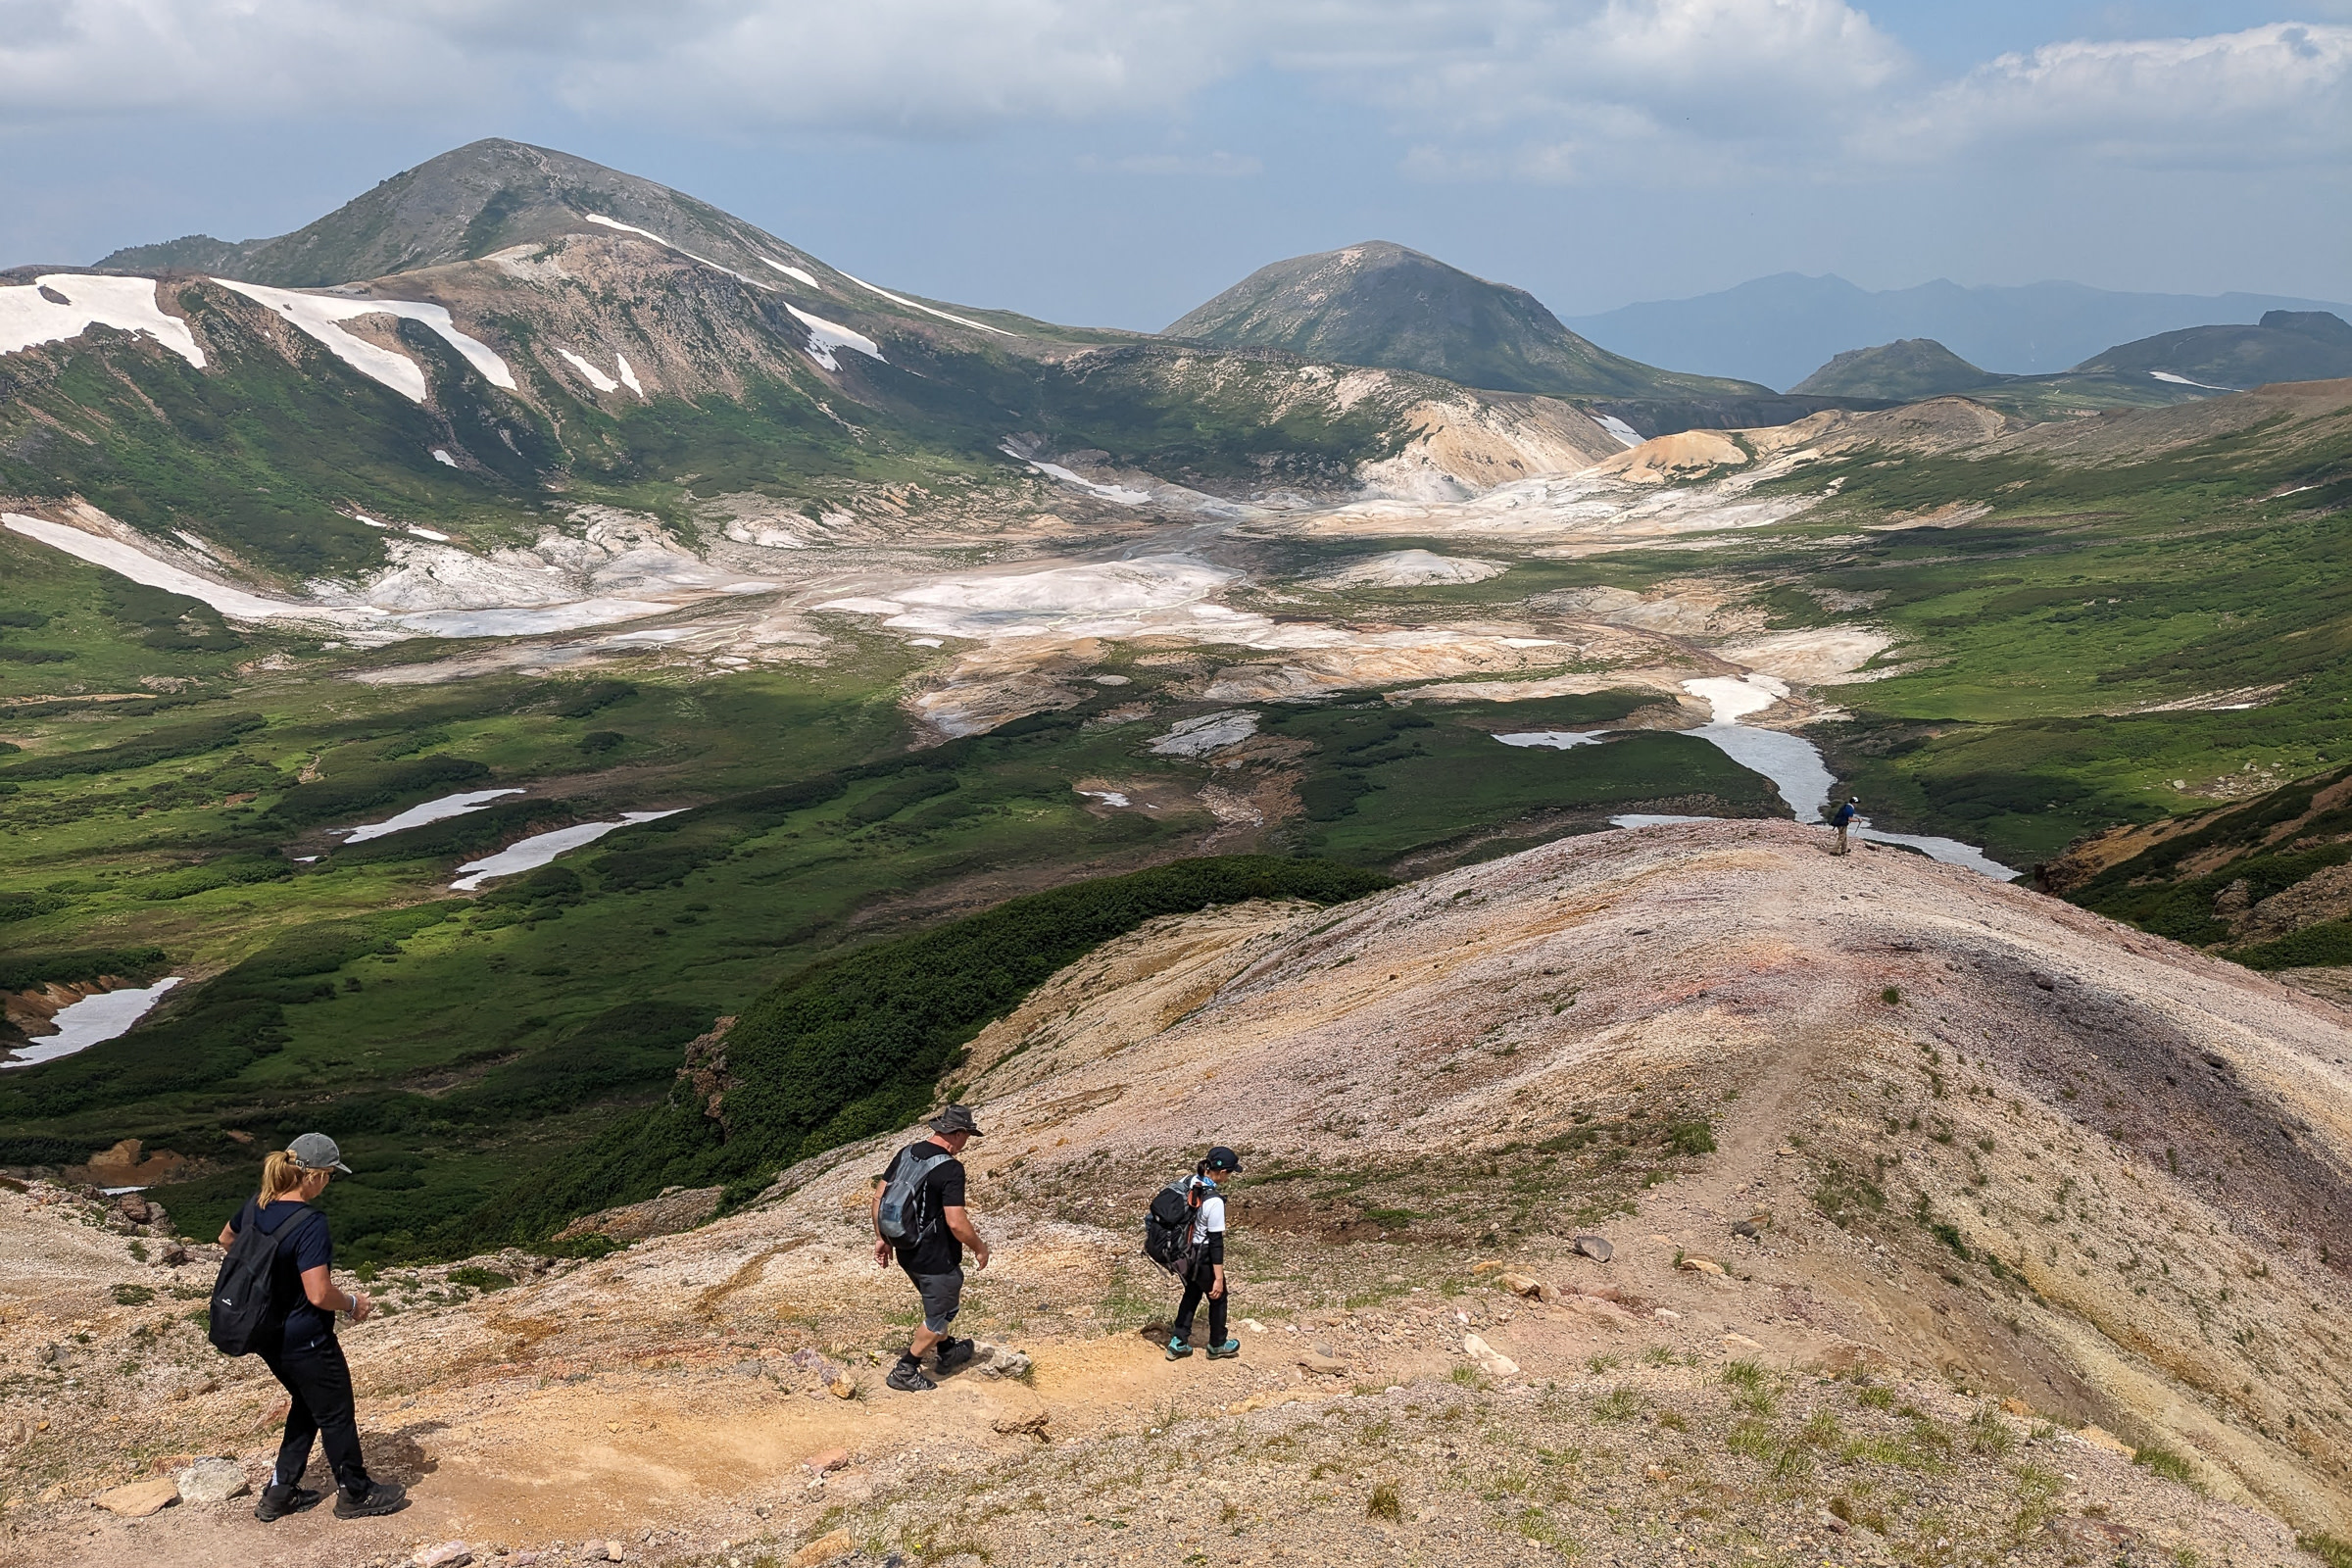 Hikers descend Mt. Asahidake and approach Ohachidaira.